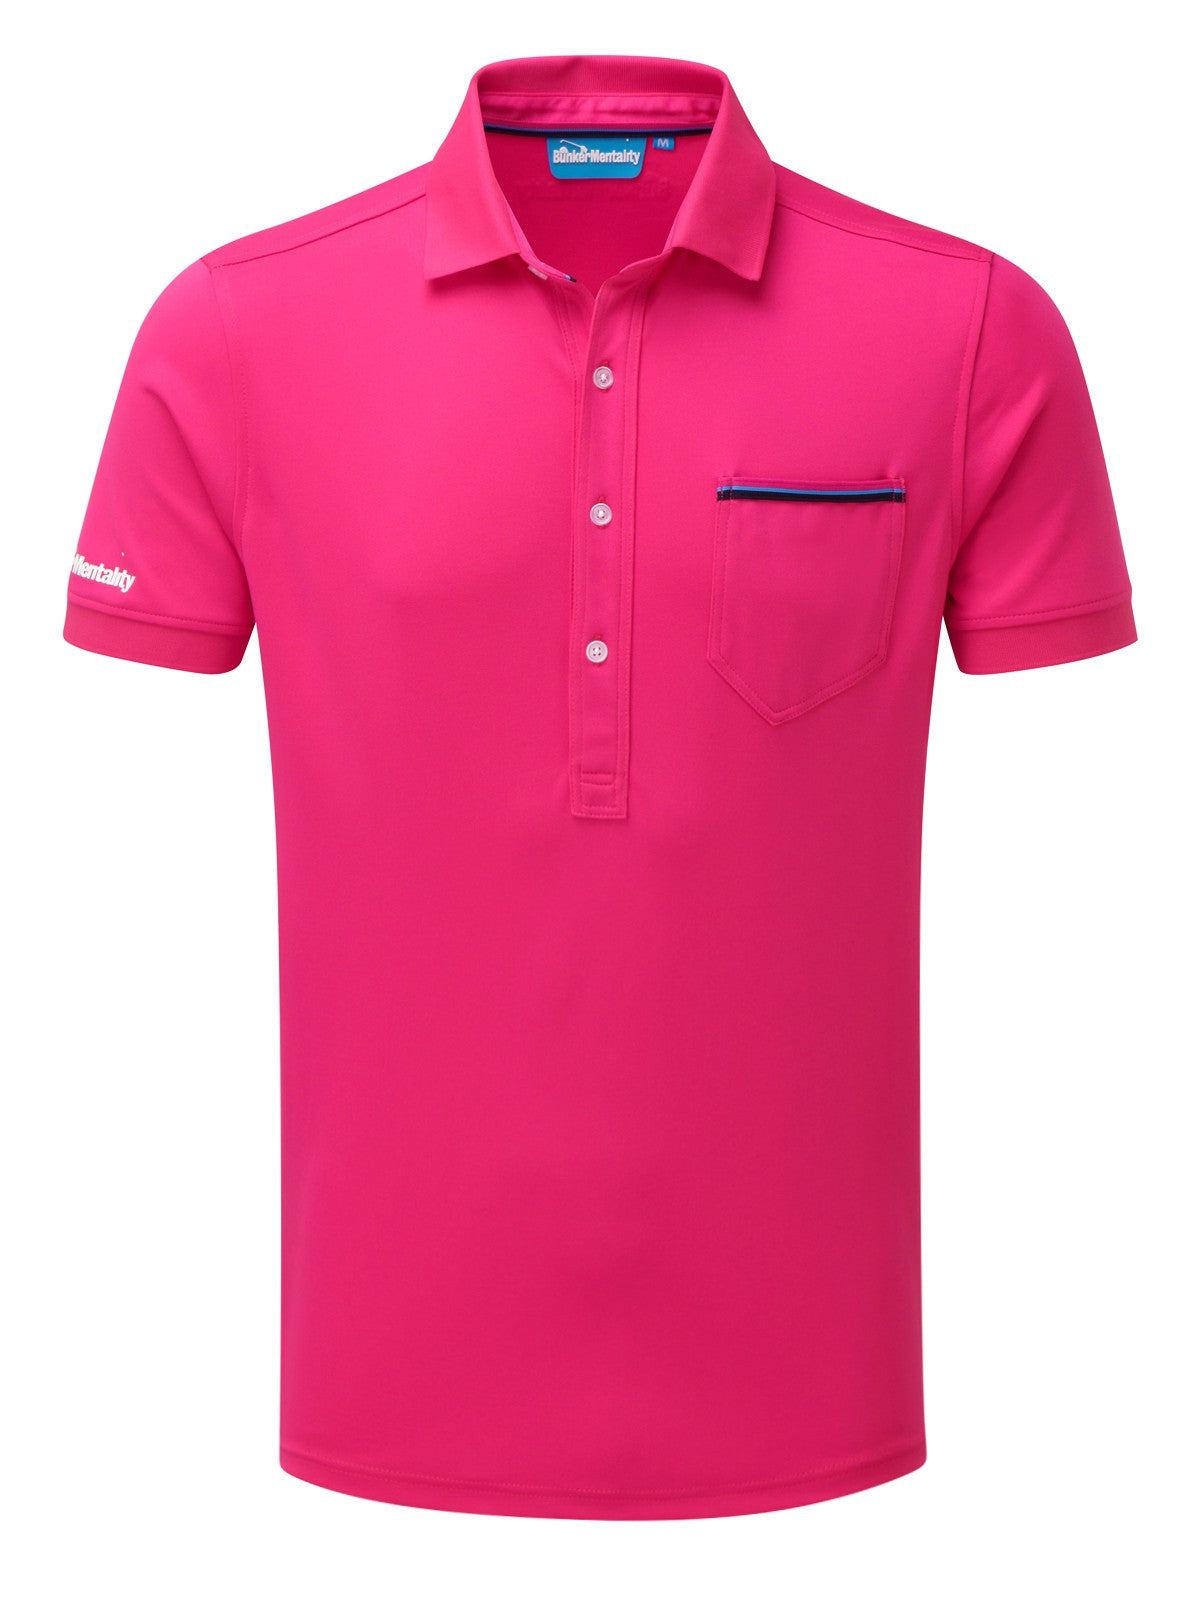 CMAX Jack Polyester Polo Shirt - Hot Pink - Various Sizes (sample)